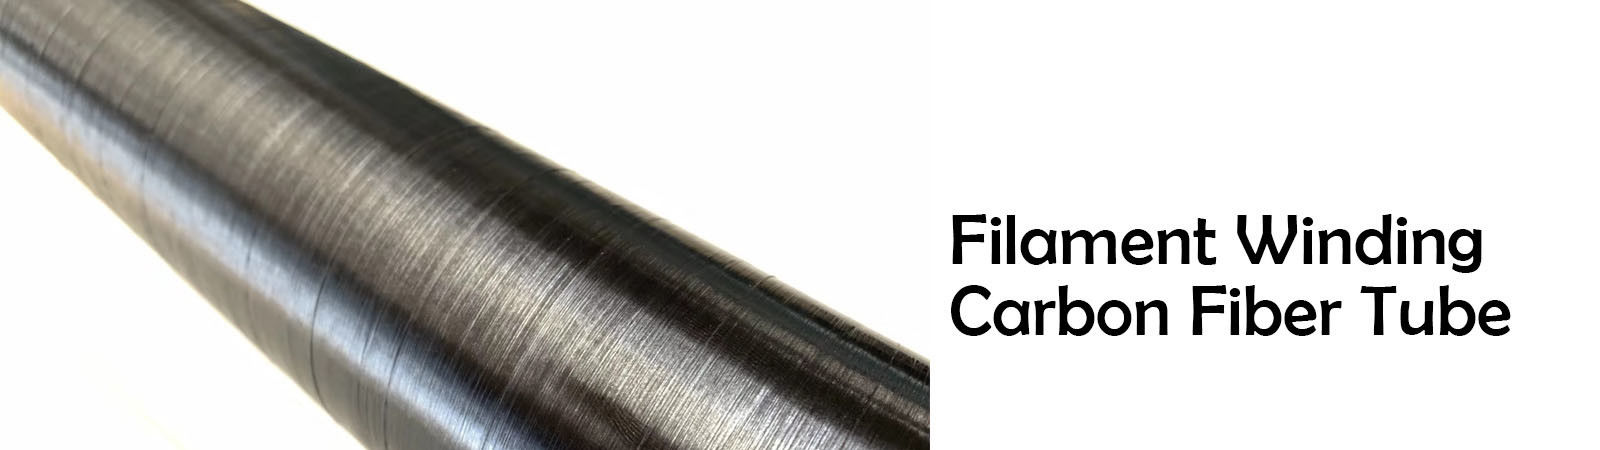 Metropolitana arrotolata della fibra del carbonio del filamento